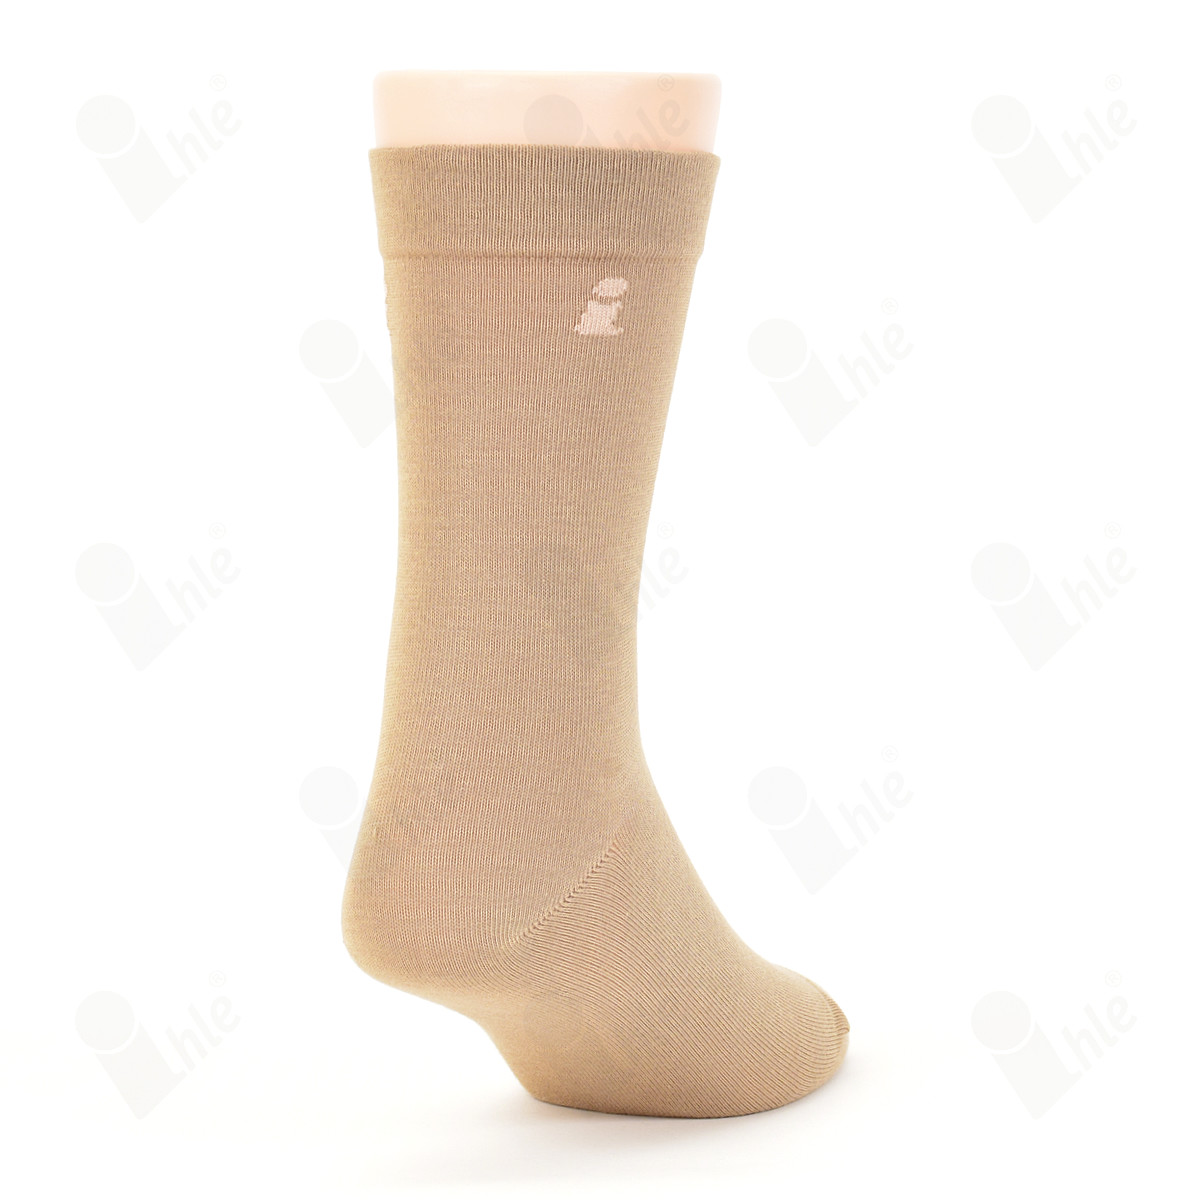 Ihle Socke klassisch beige Gr. 43-46